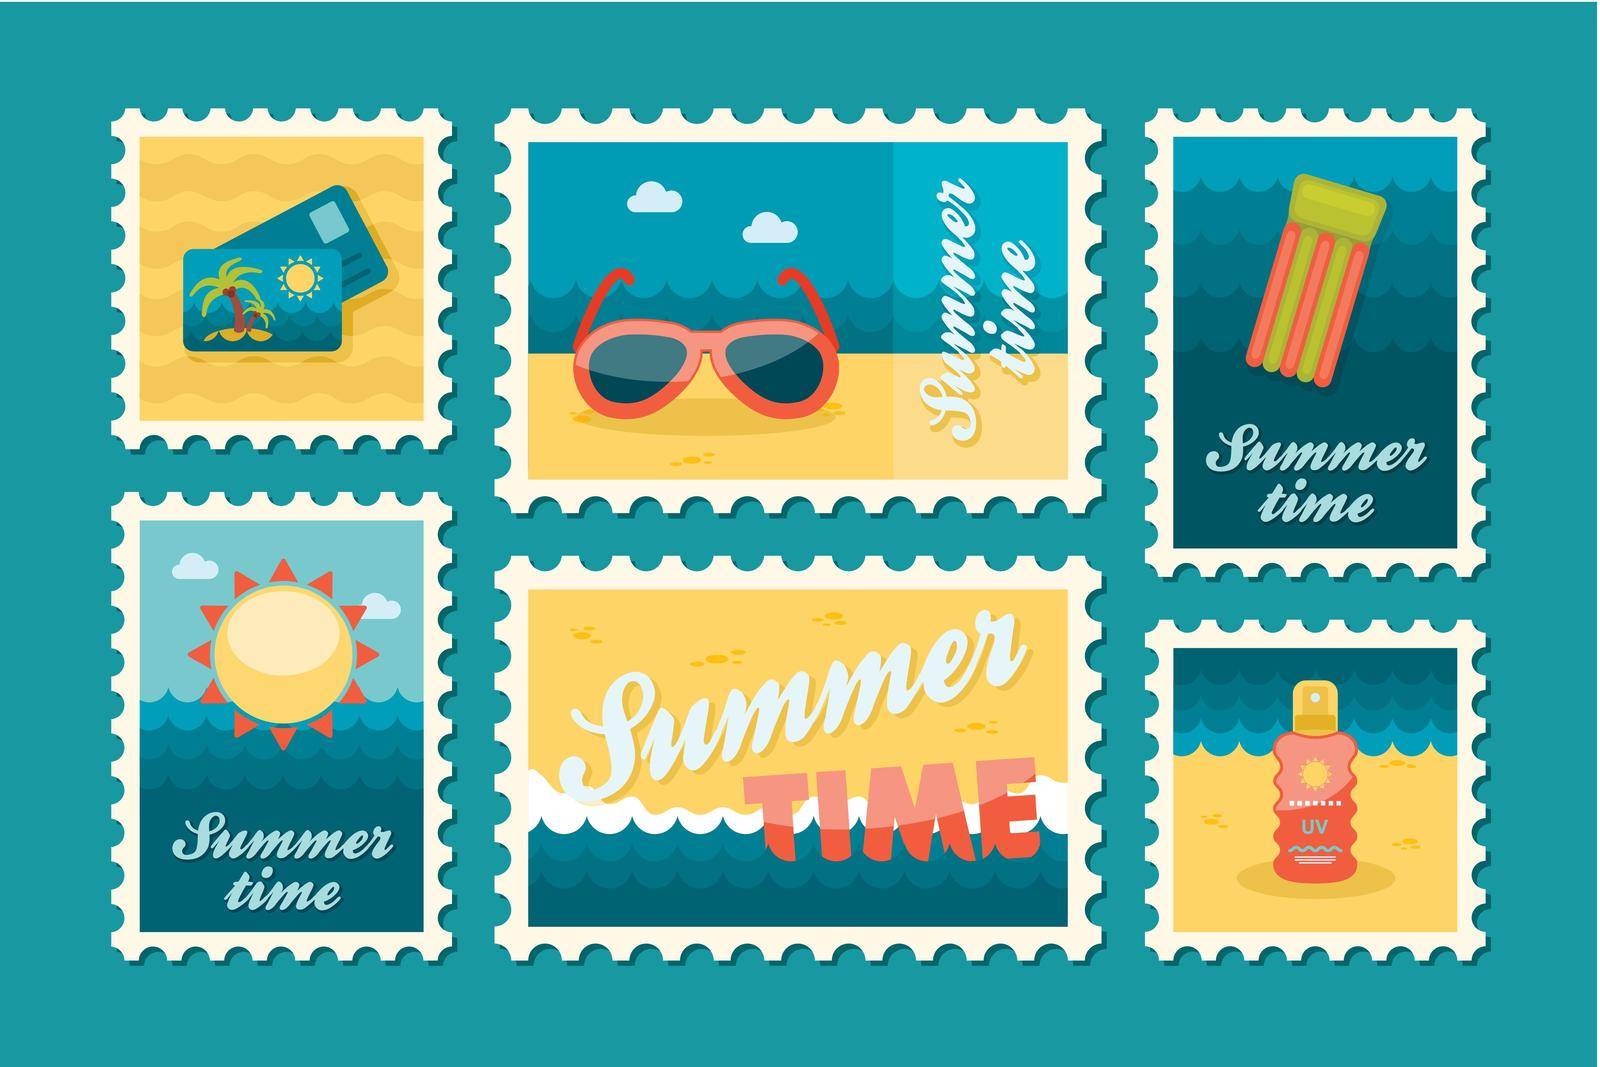 Summertime stamp set flat, vector eps 10